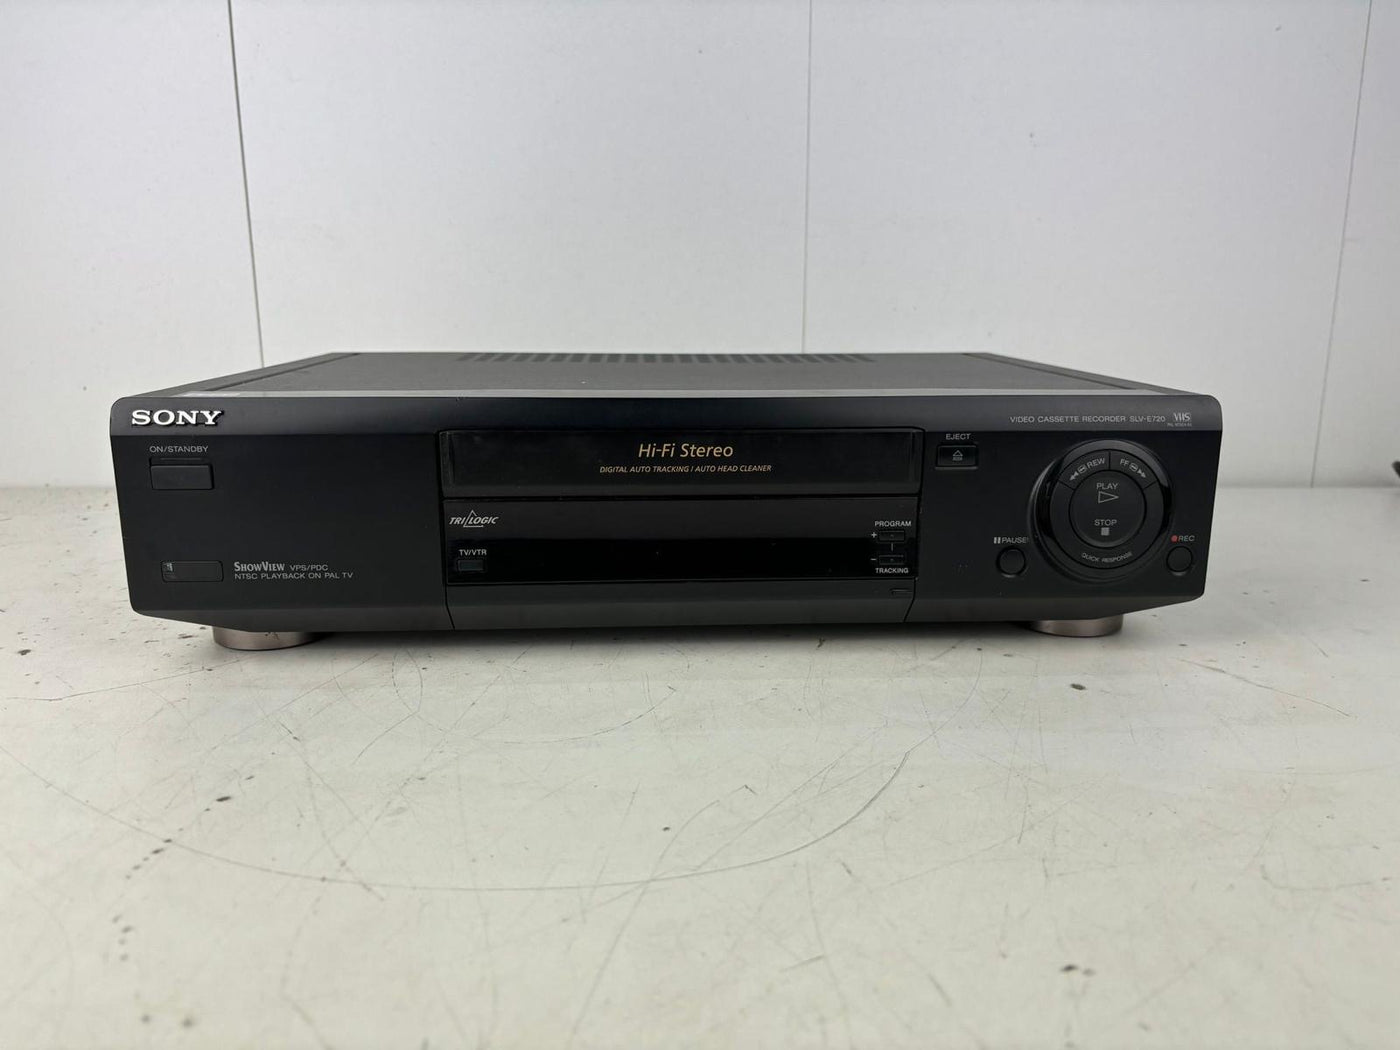 Sony SLV-E720 Video Cassette Recorder VHS | Goed beschrijving lezen!